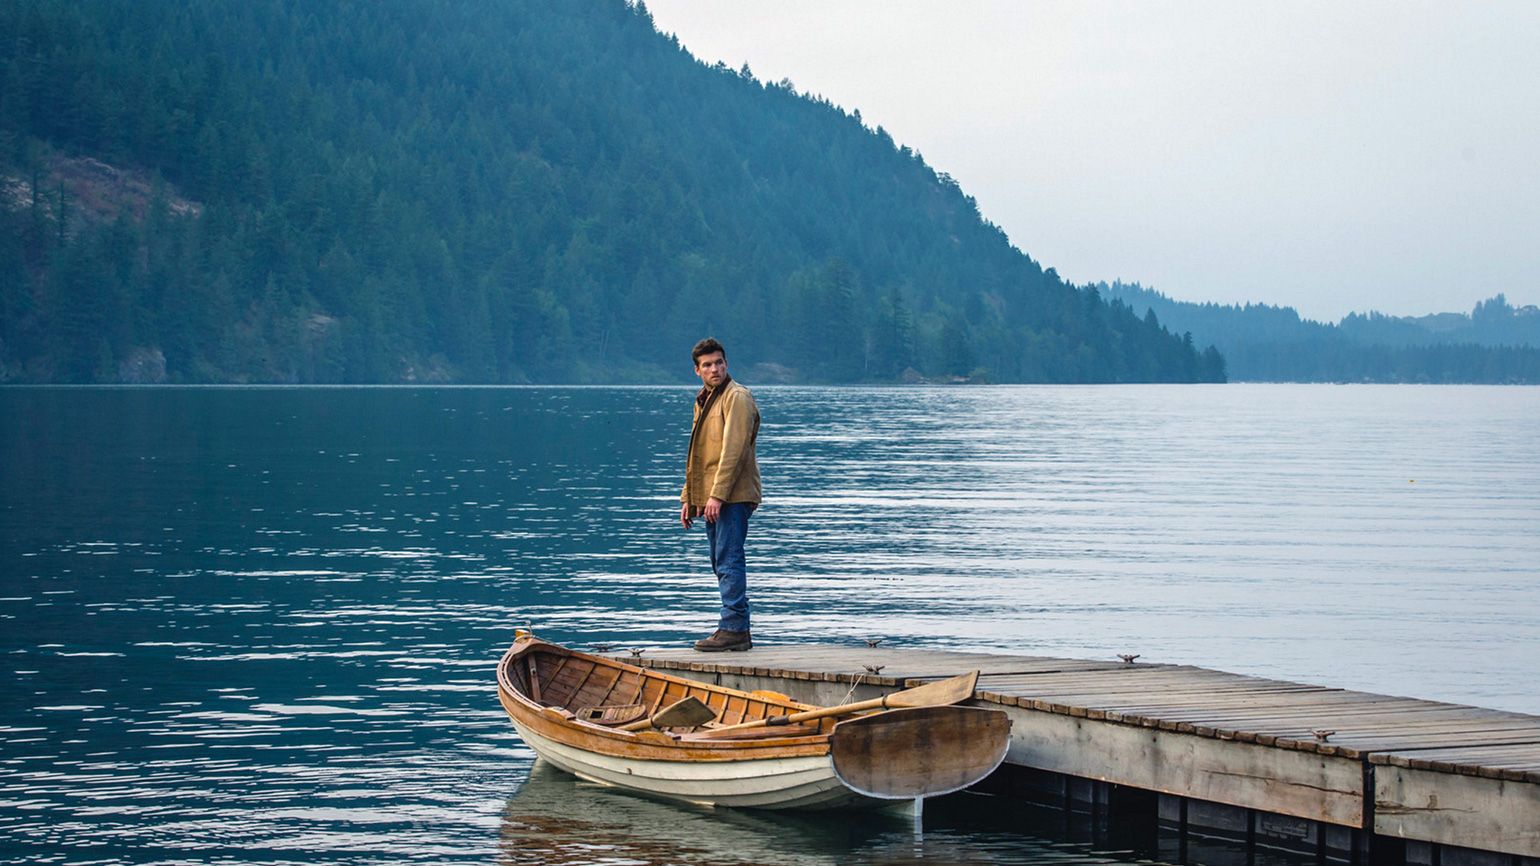 Sam Worthington as Mack Phillips gazes out at a mountain lake